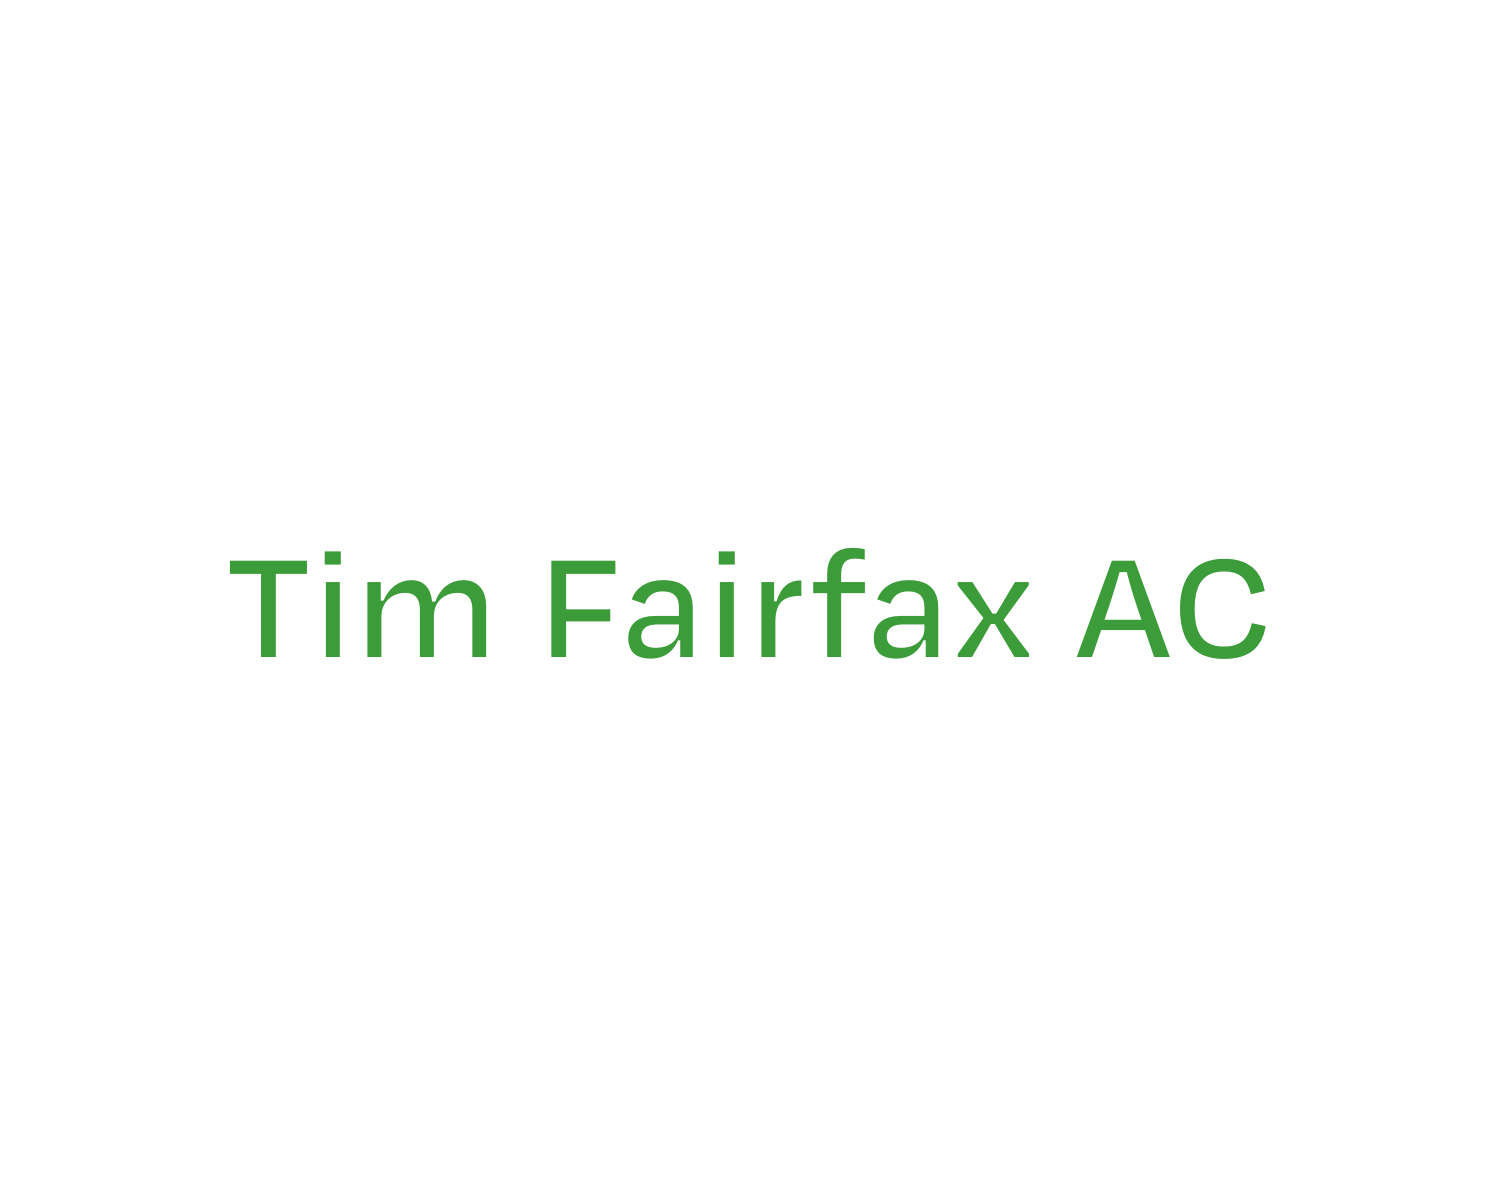 Tim Fairfax AC